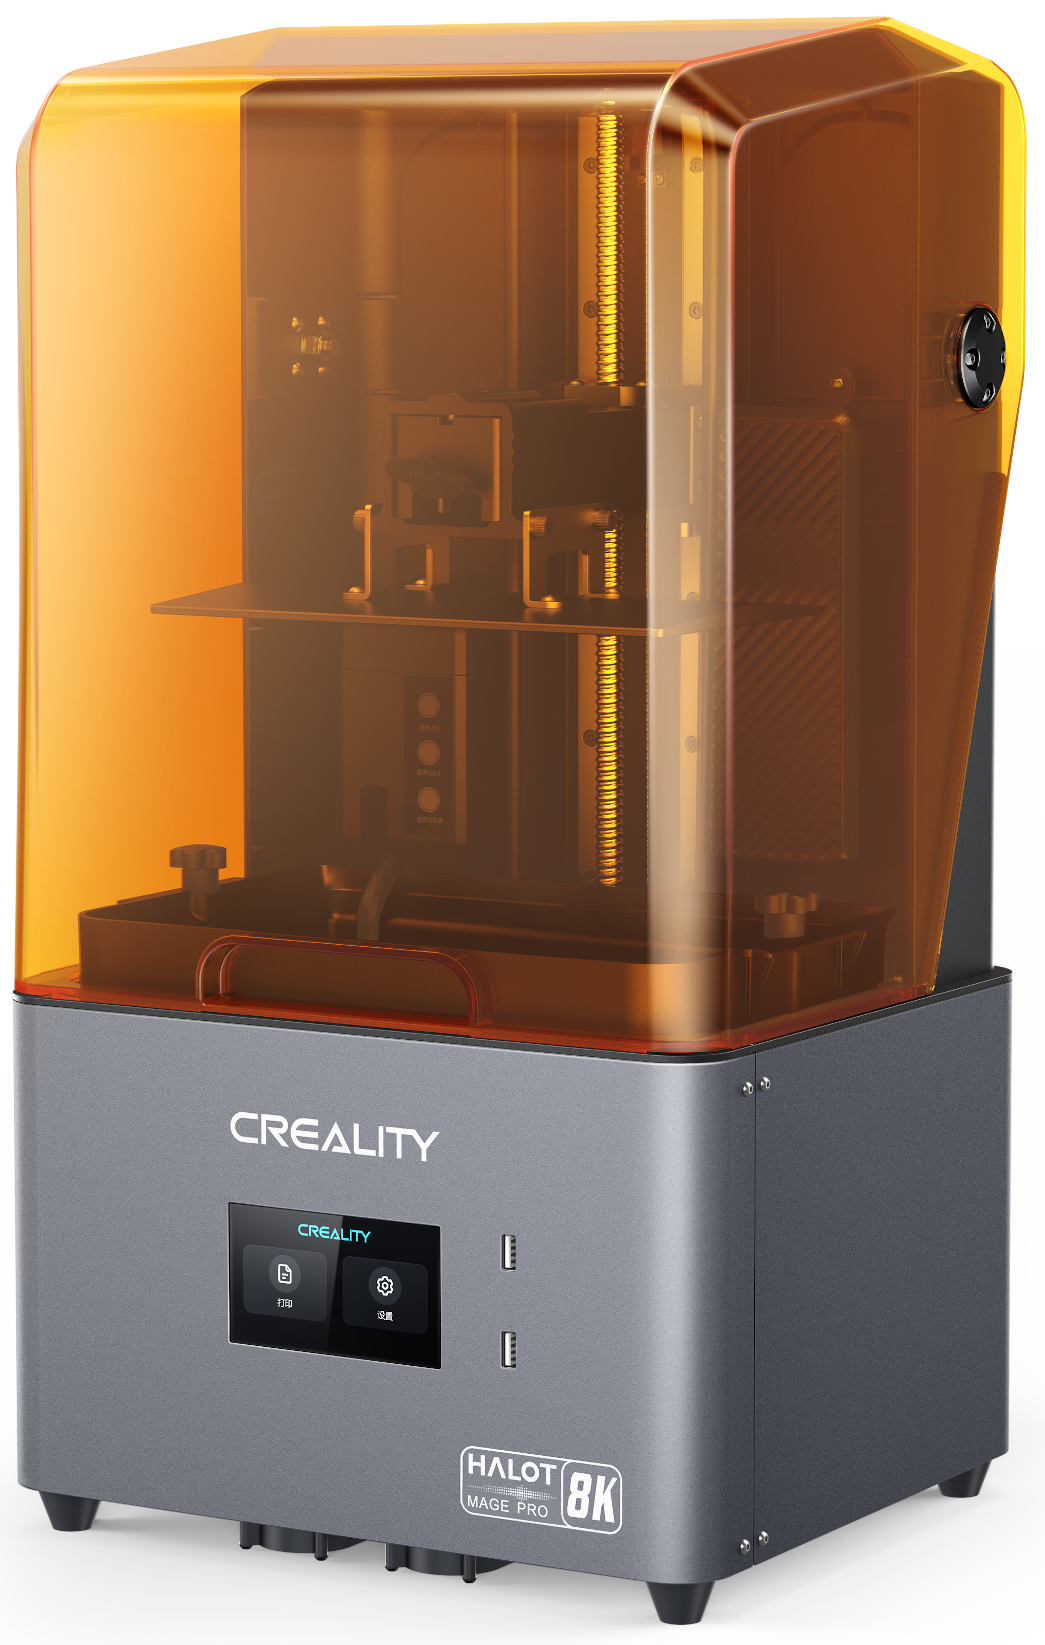 CREALITY Halot-Mage PRO 3D Printer